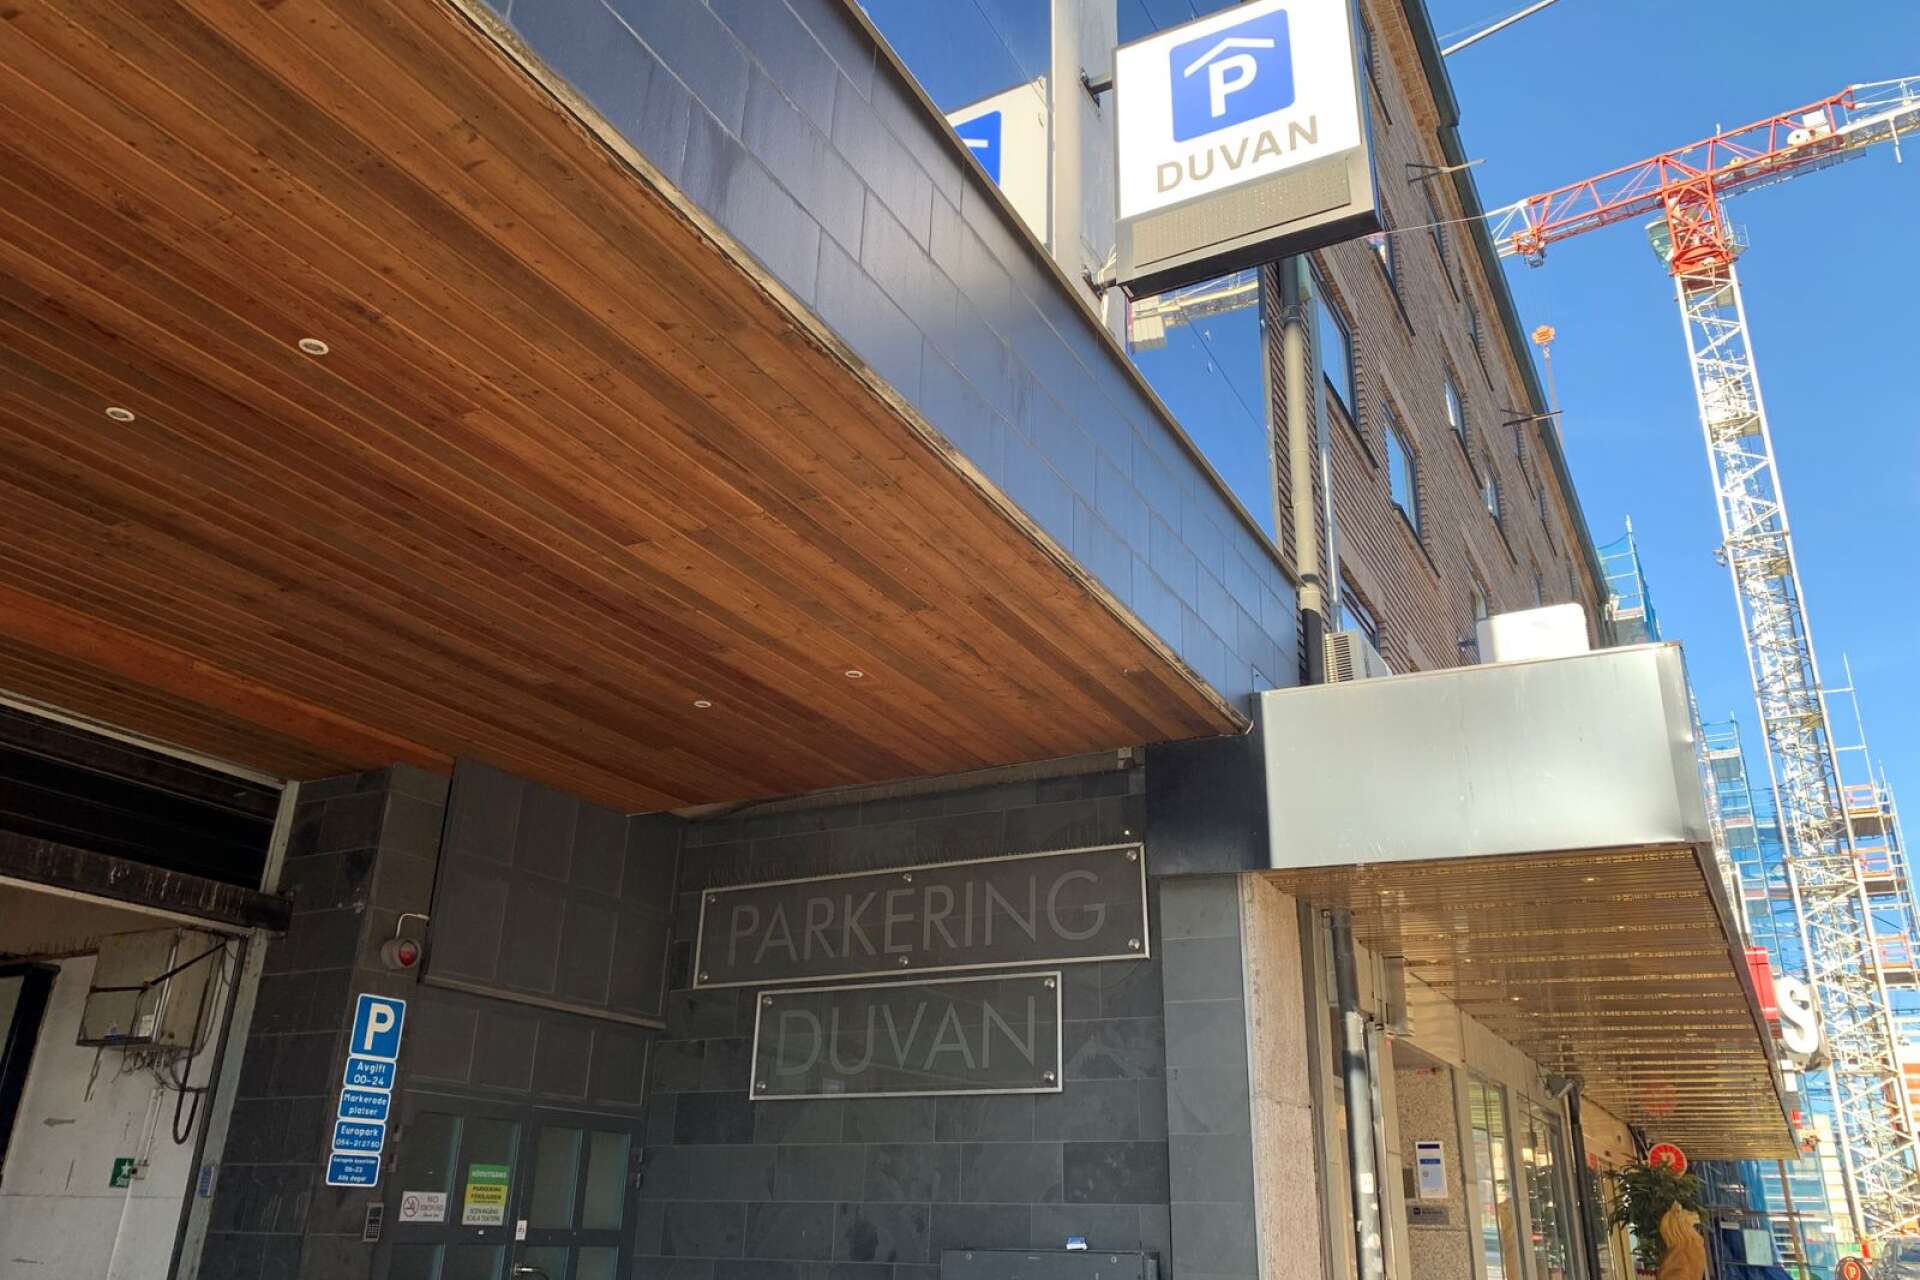 Duvans parkeringshus i Karlstad kritiseras.